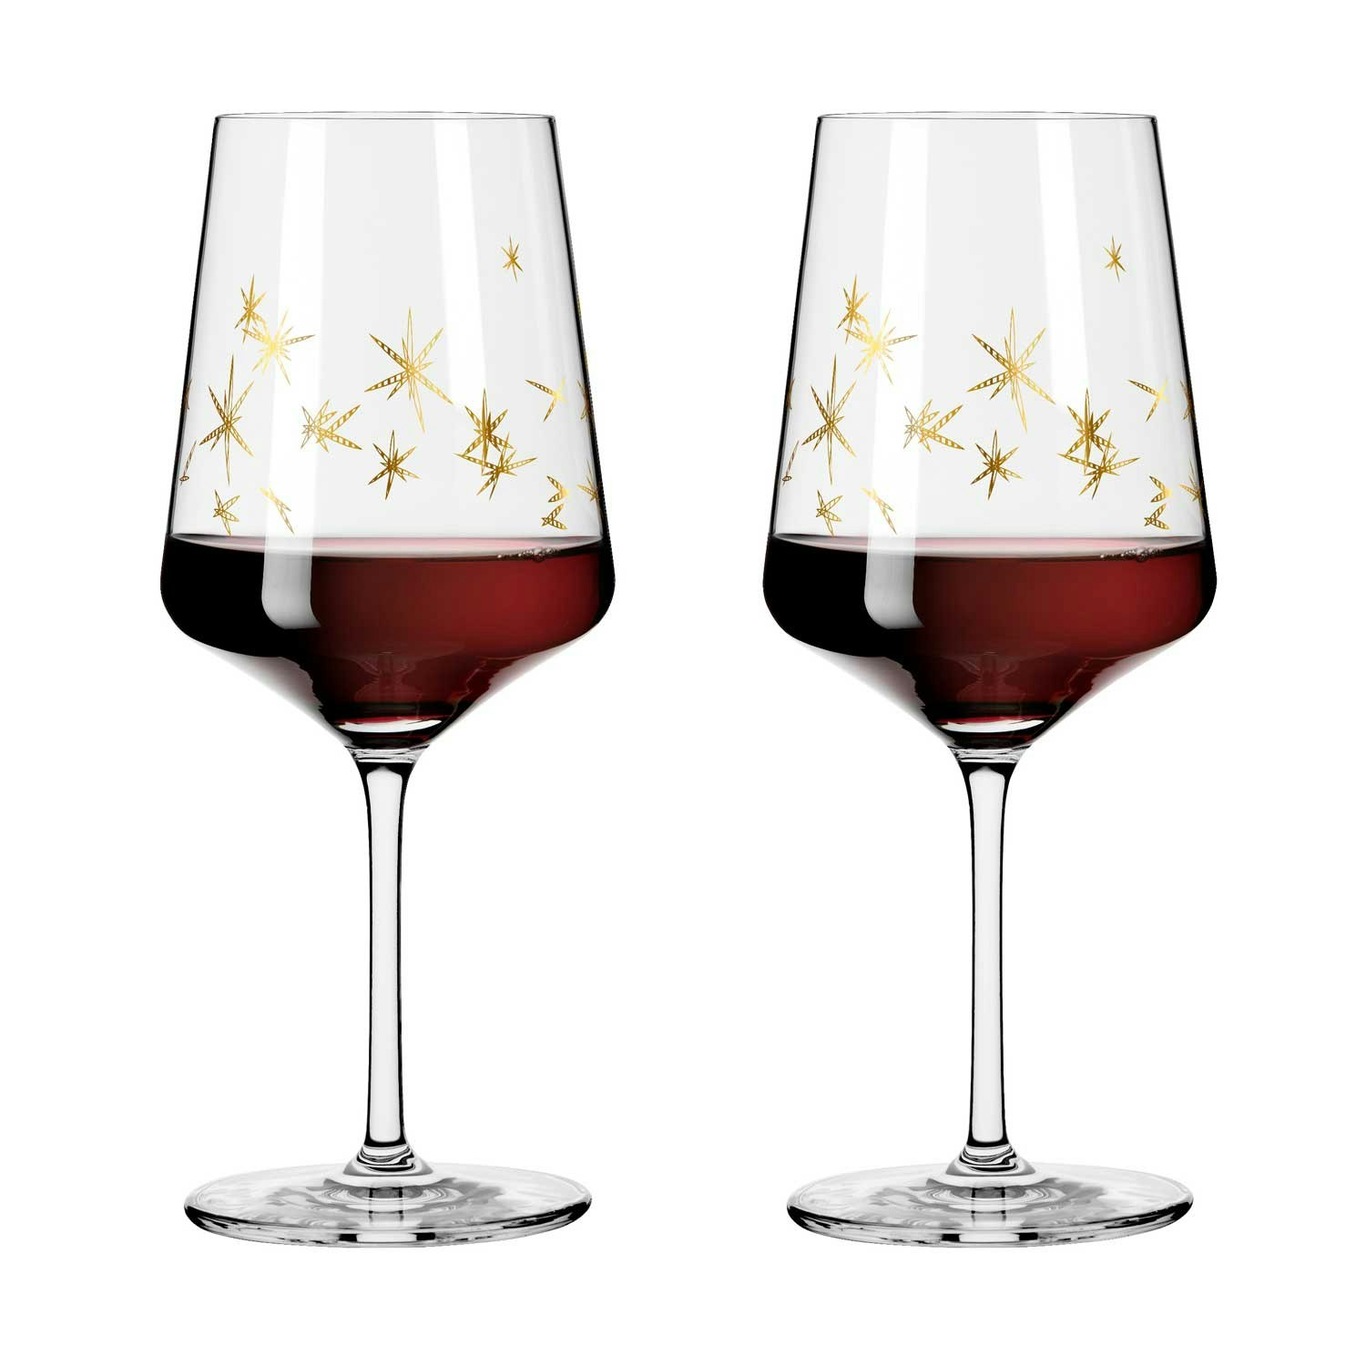 https://royaldesign.com/image/2/ritzenhoff-celebration-deluxe-red-wine-glass-stars-2-pack-54-cl-0?w=800&quality=80